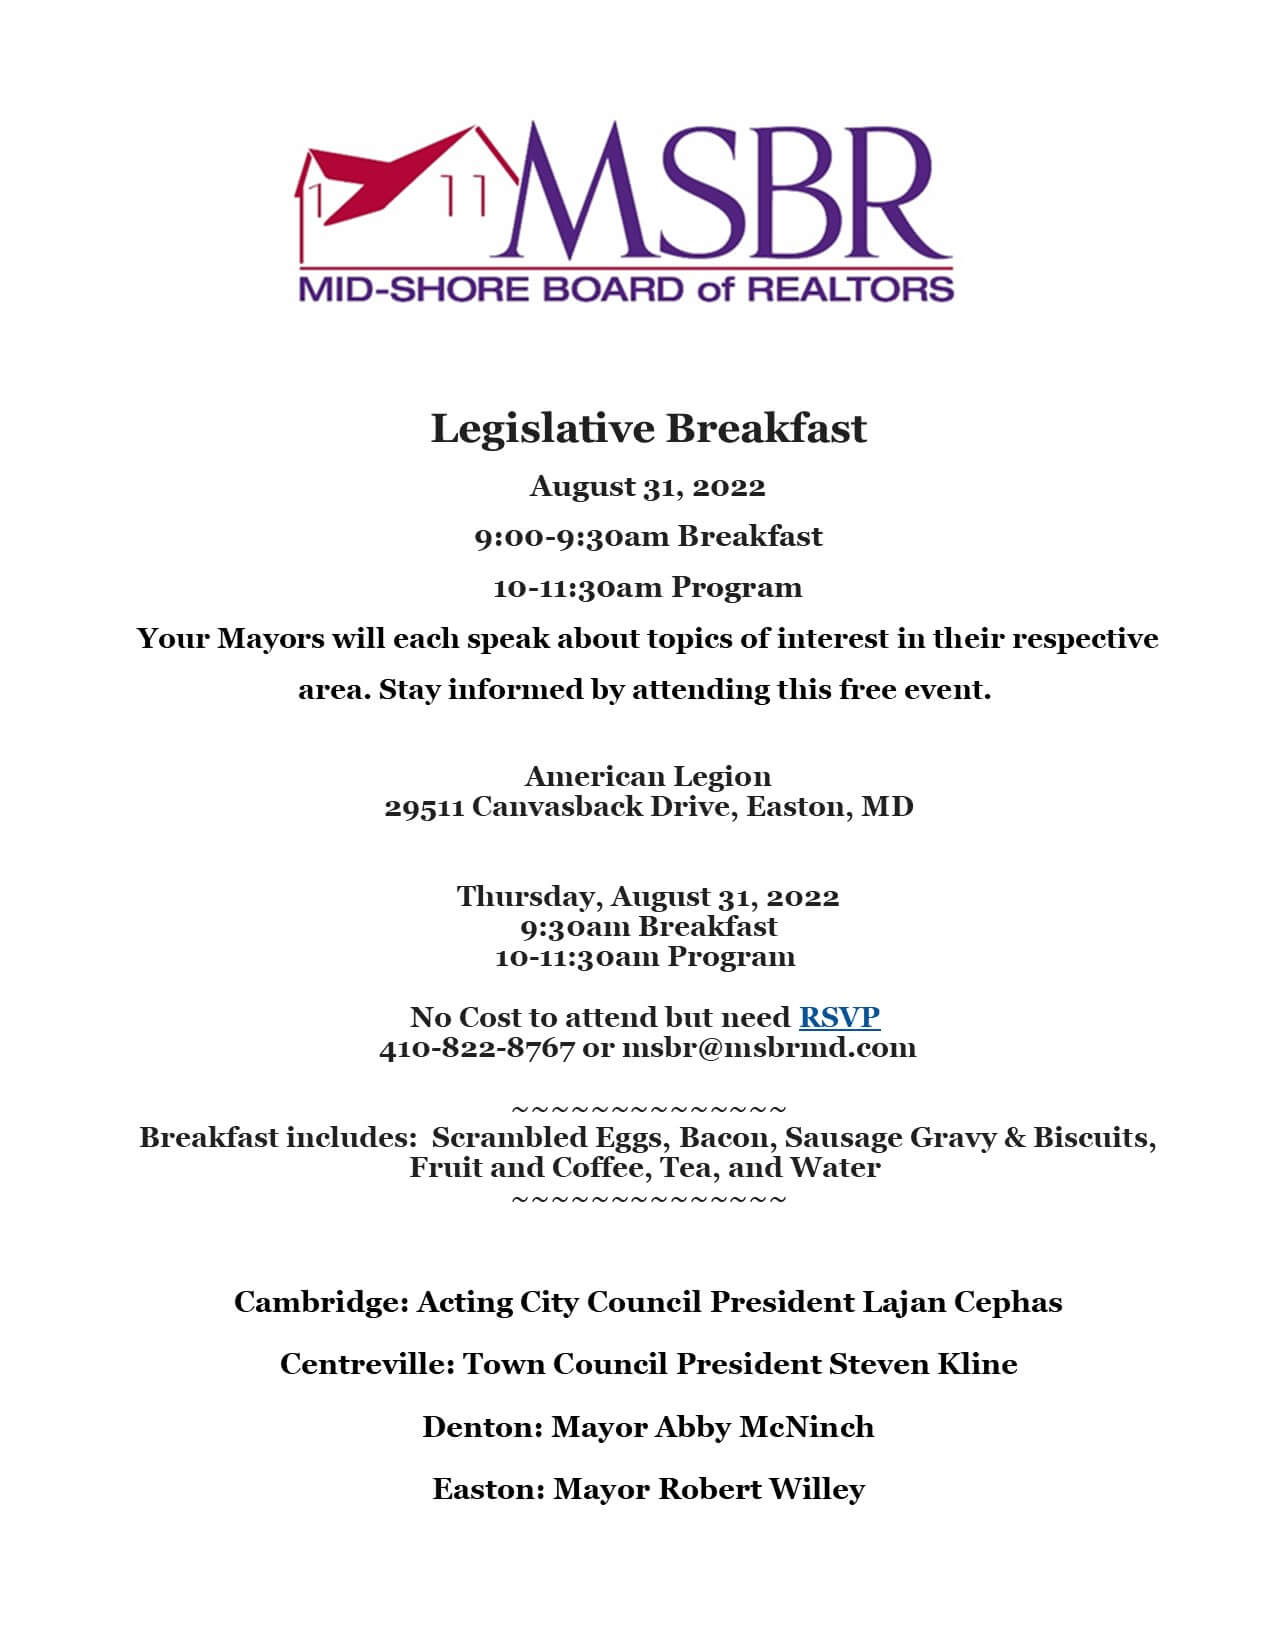 Legislative Breakfast Flyer 2022